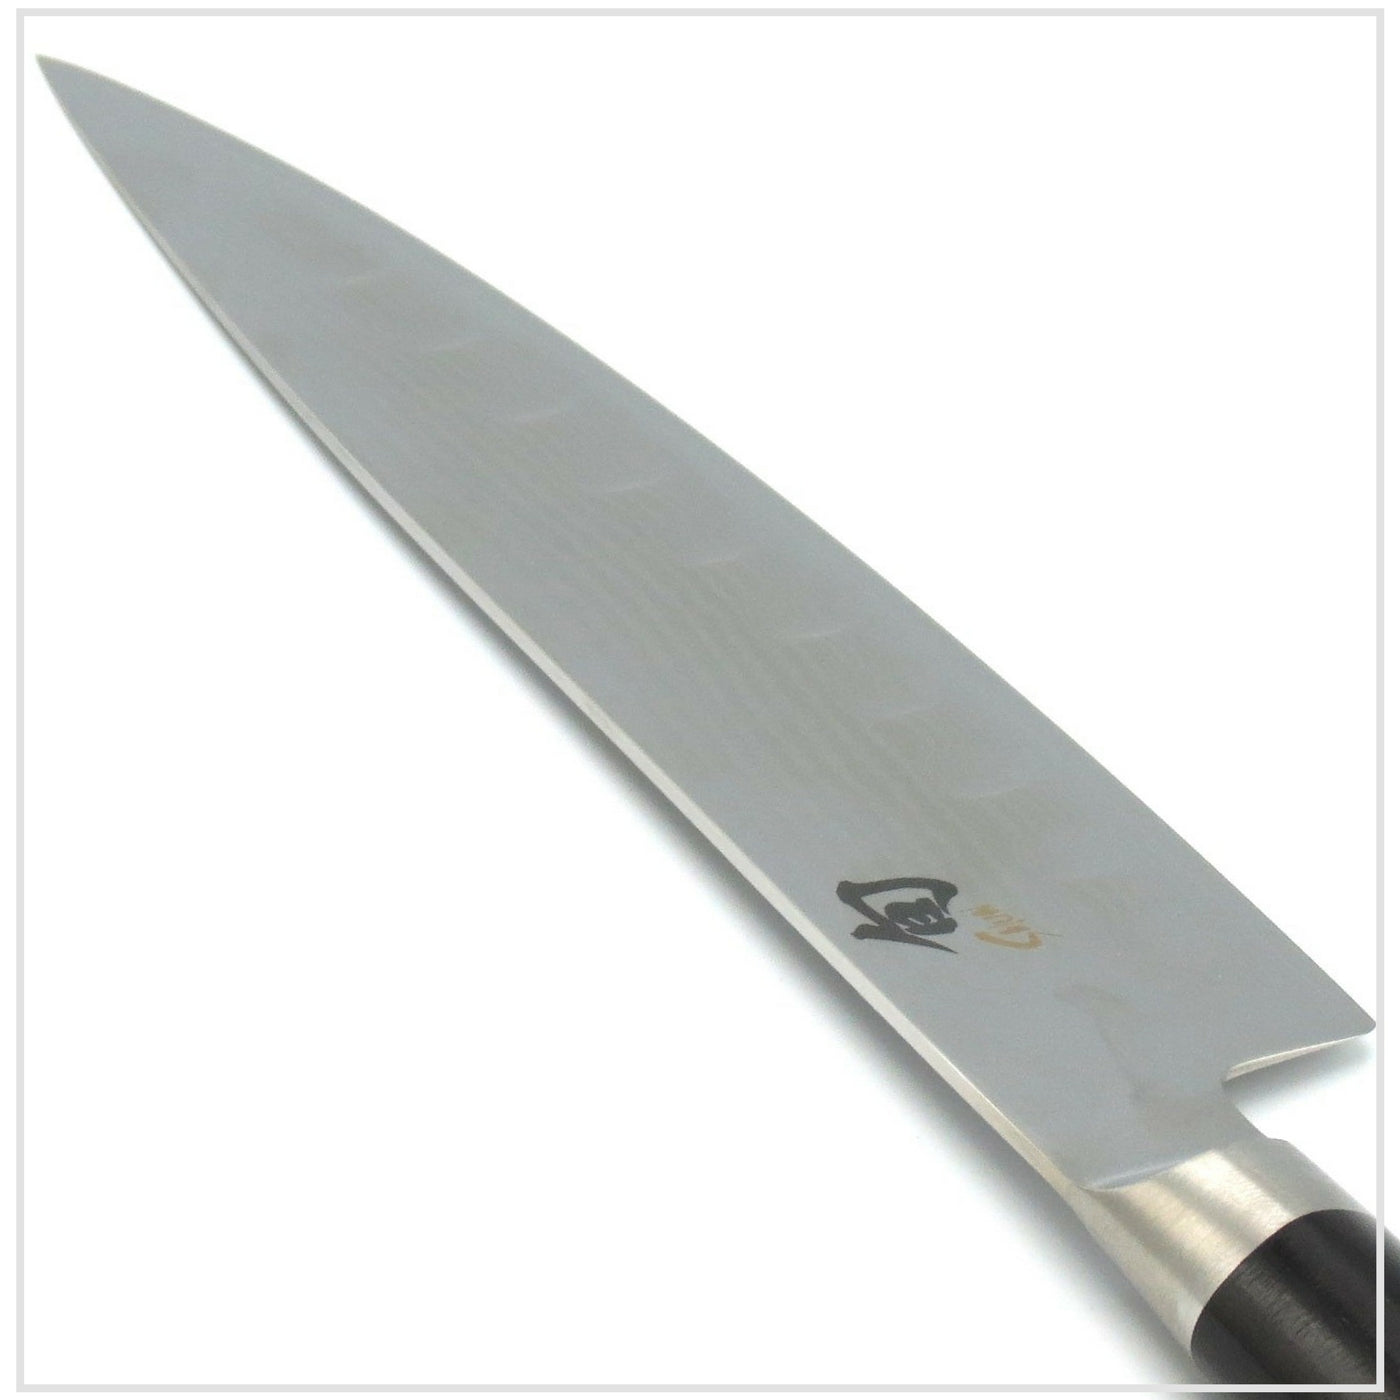 KAI SHUN Scalloped Chef's Knife 20cm